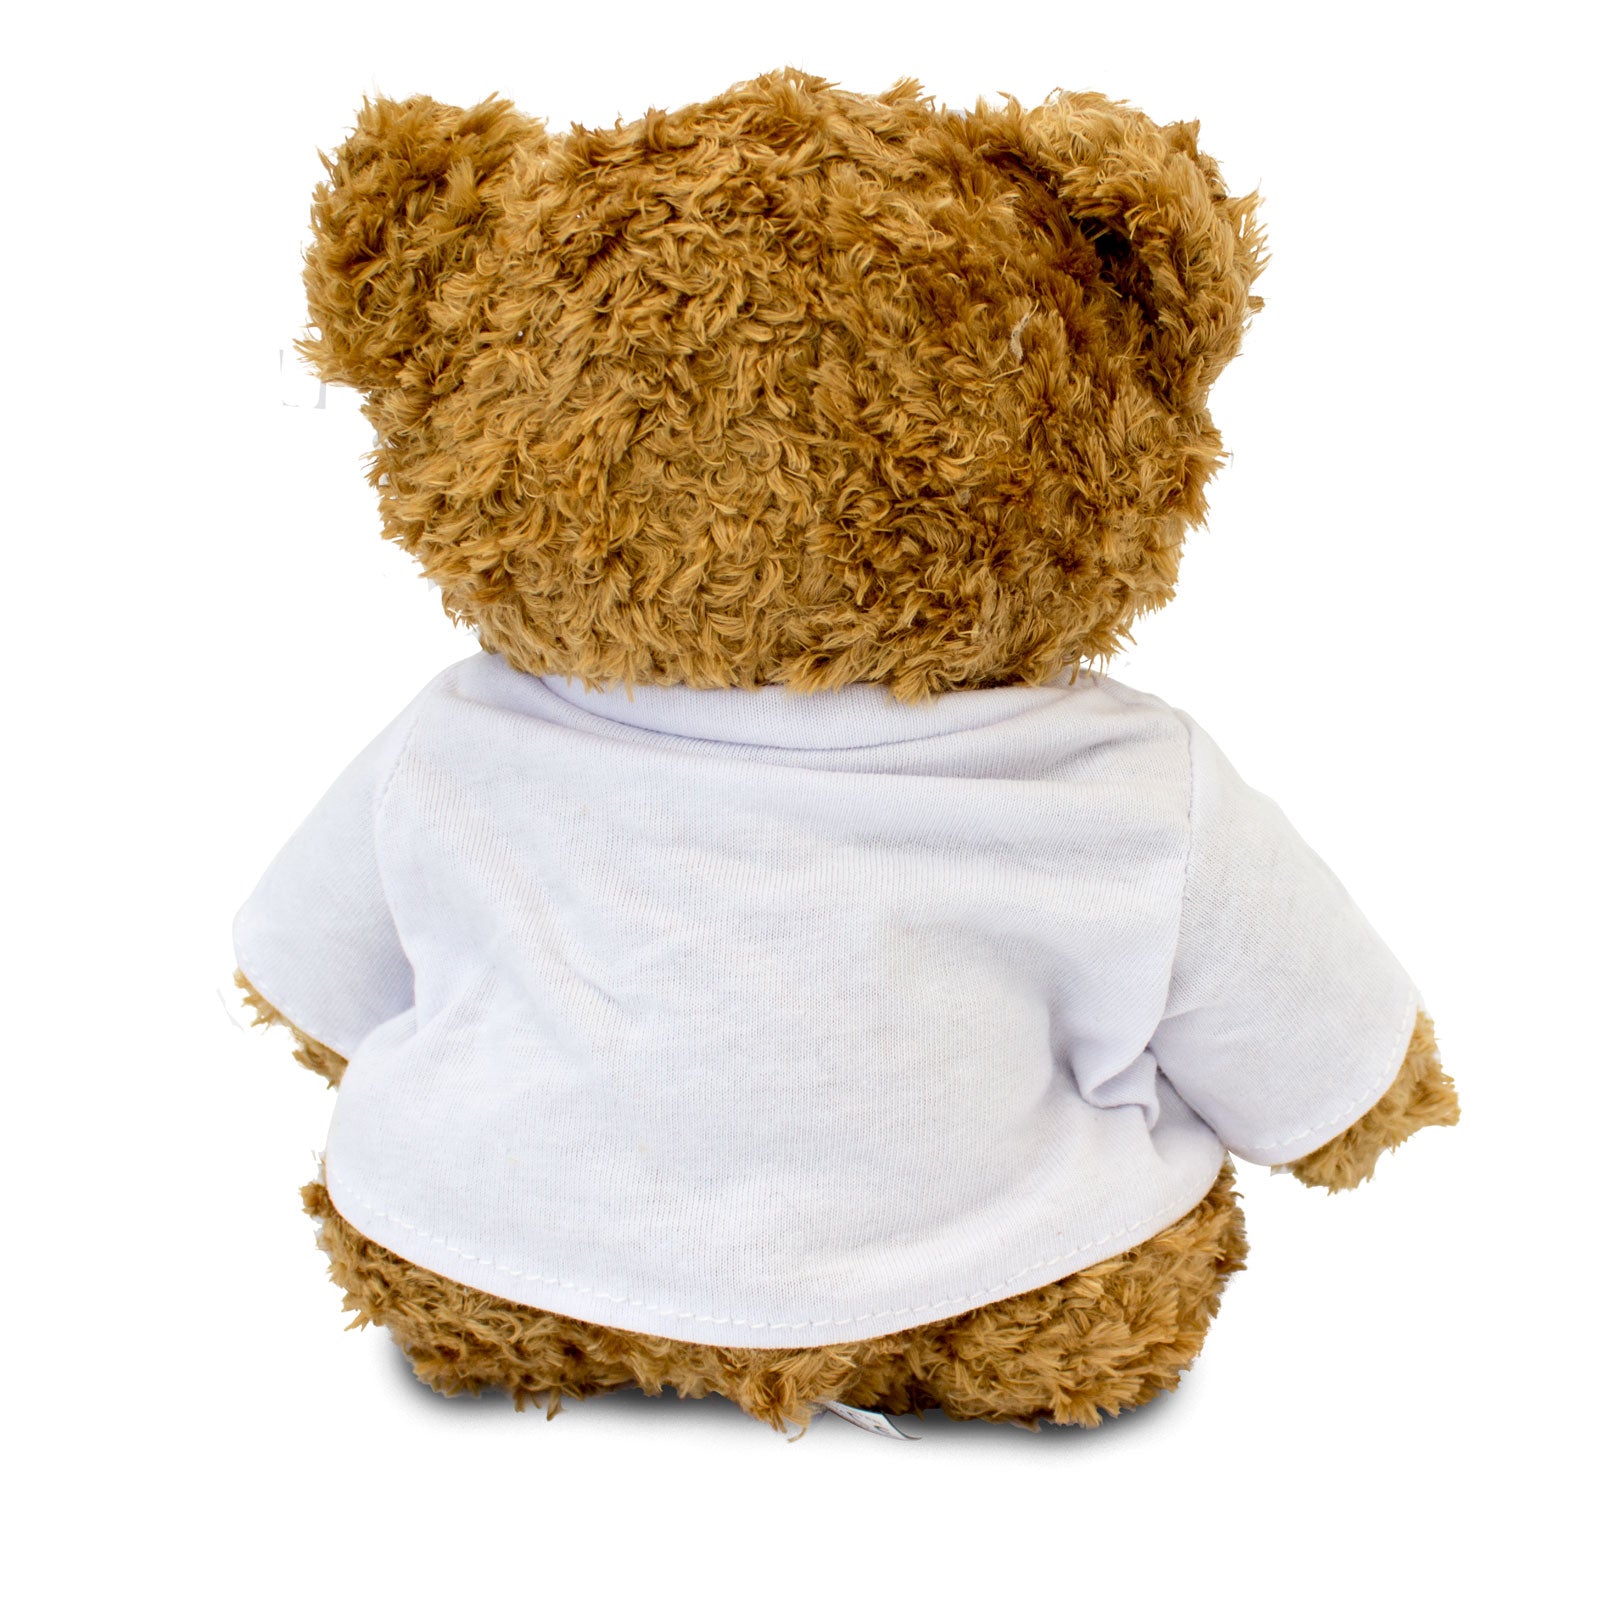 Get Well Soon Addison - Teddy Bear